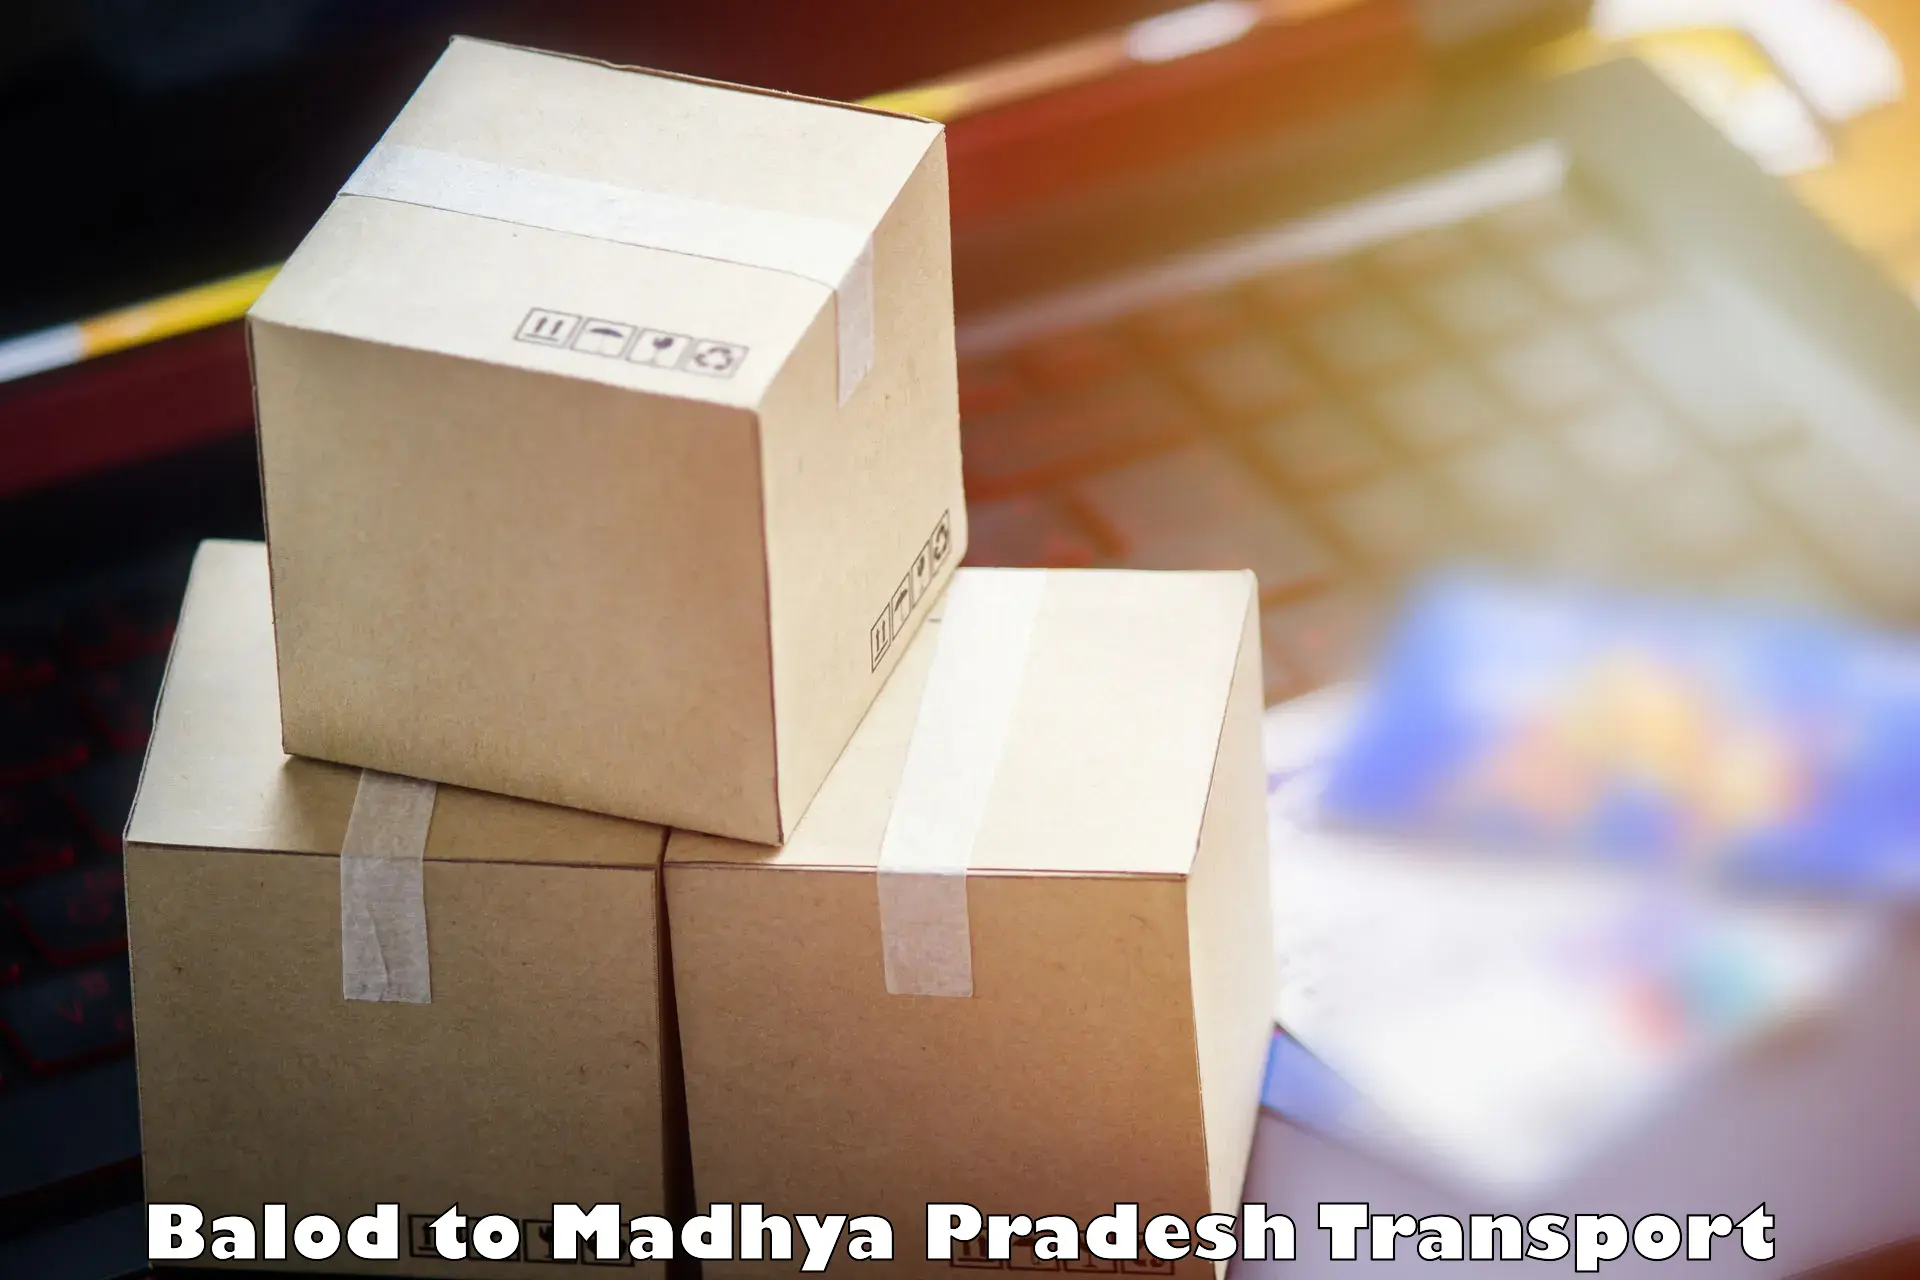 Delivery service Balod to Madhya Pradesh